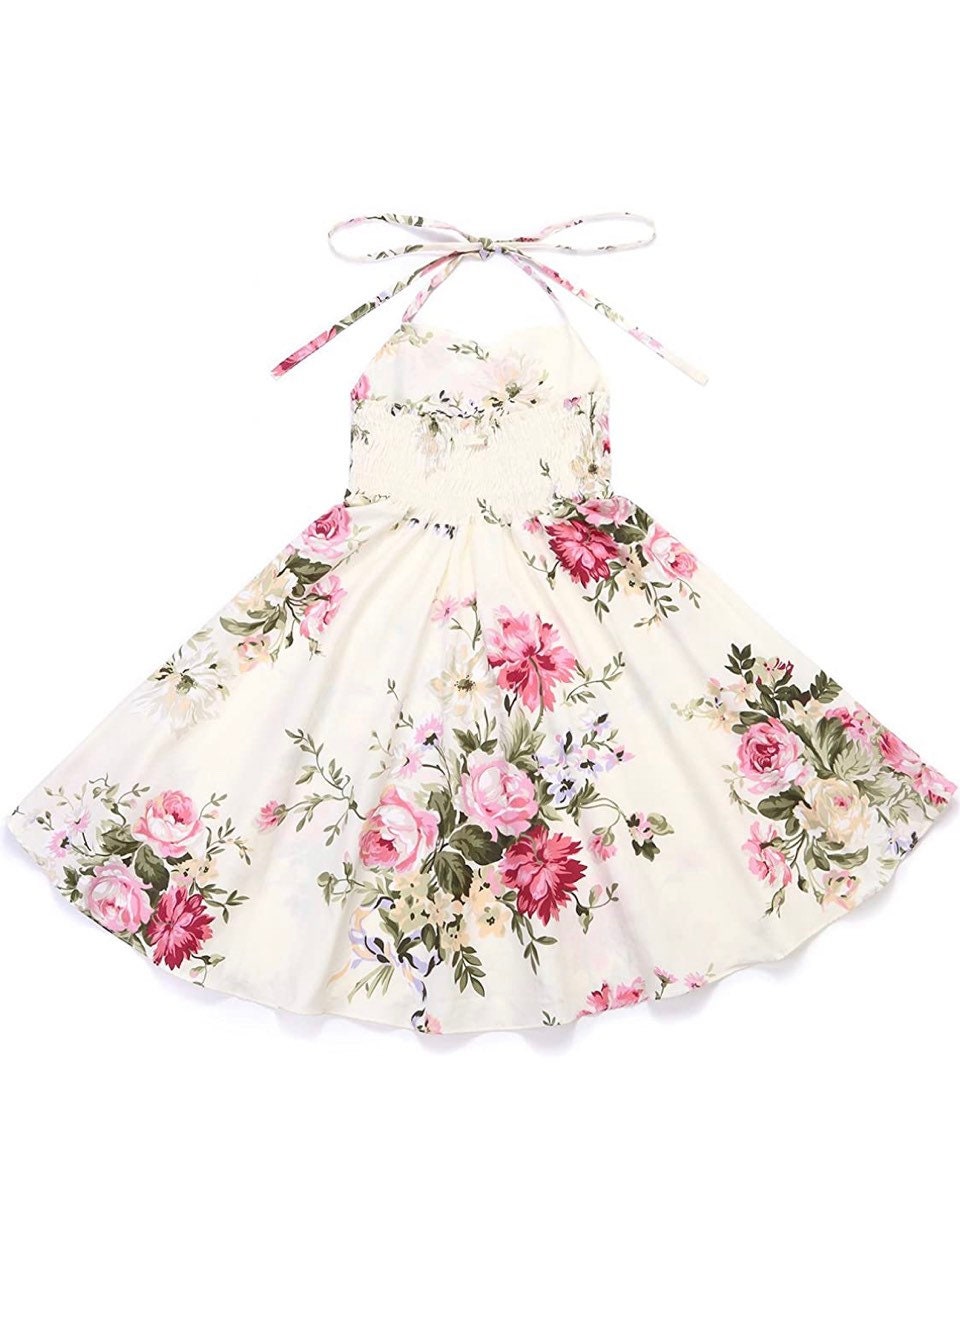 Off White Floral Dress for Girls Little Girls Clothing - Etsy